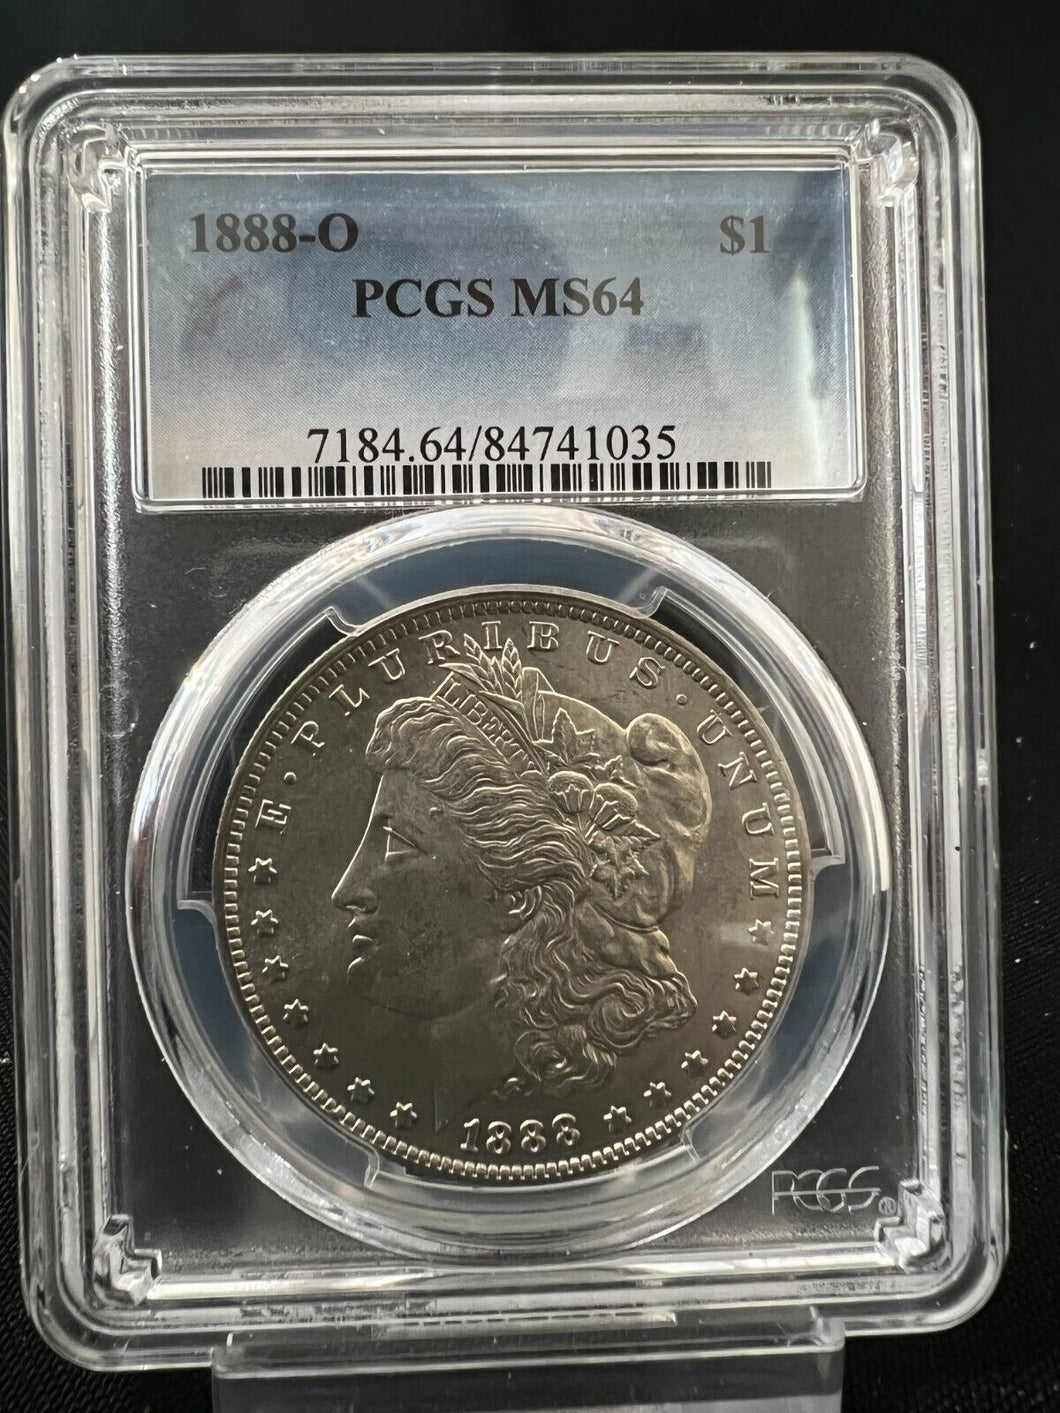 1888-O $1 Morgan Silver Dollar PCGS MS64 - Blast White & Well Struck!